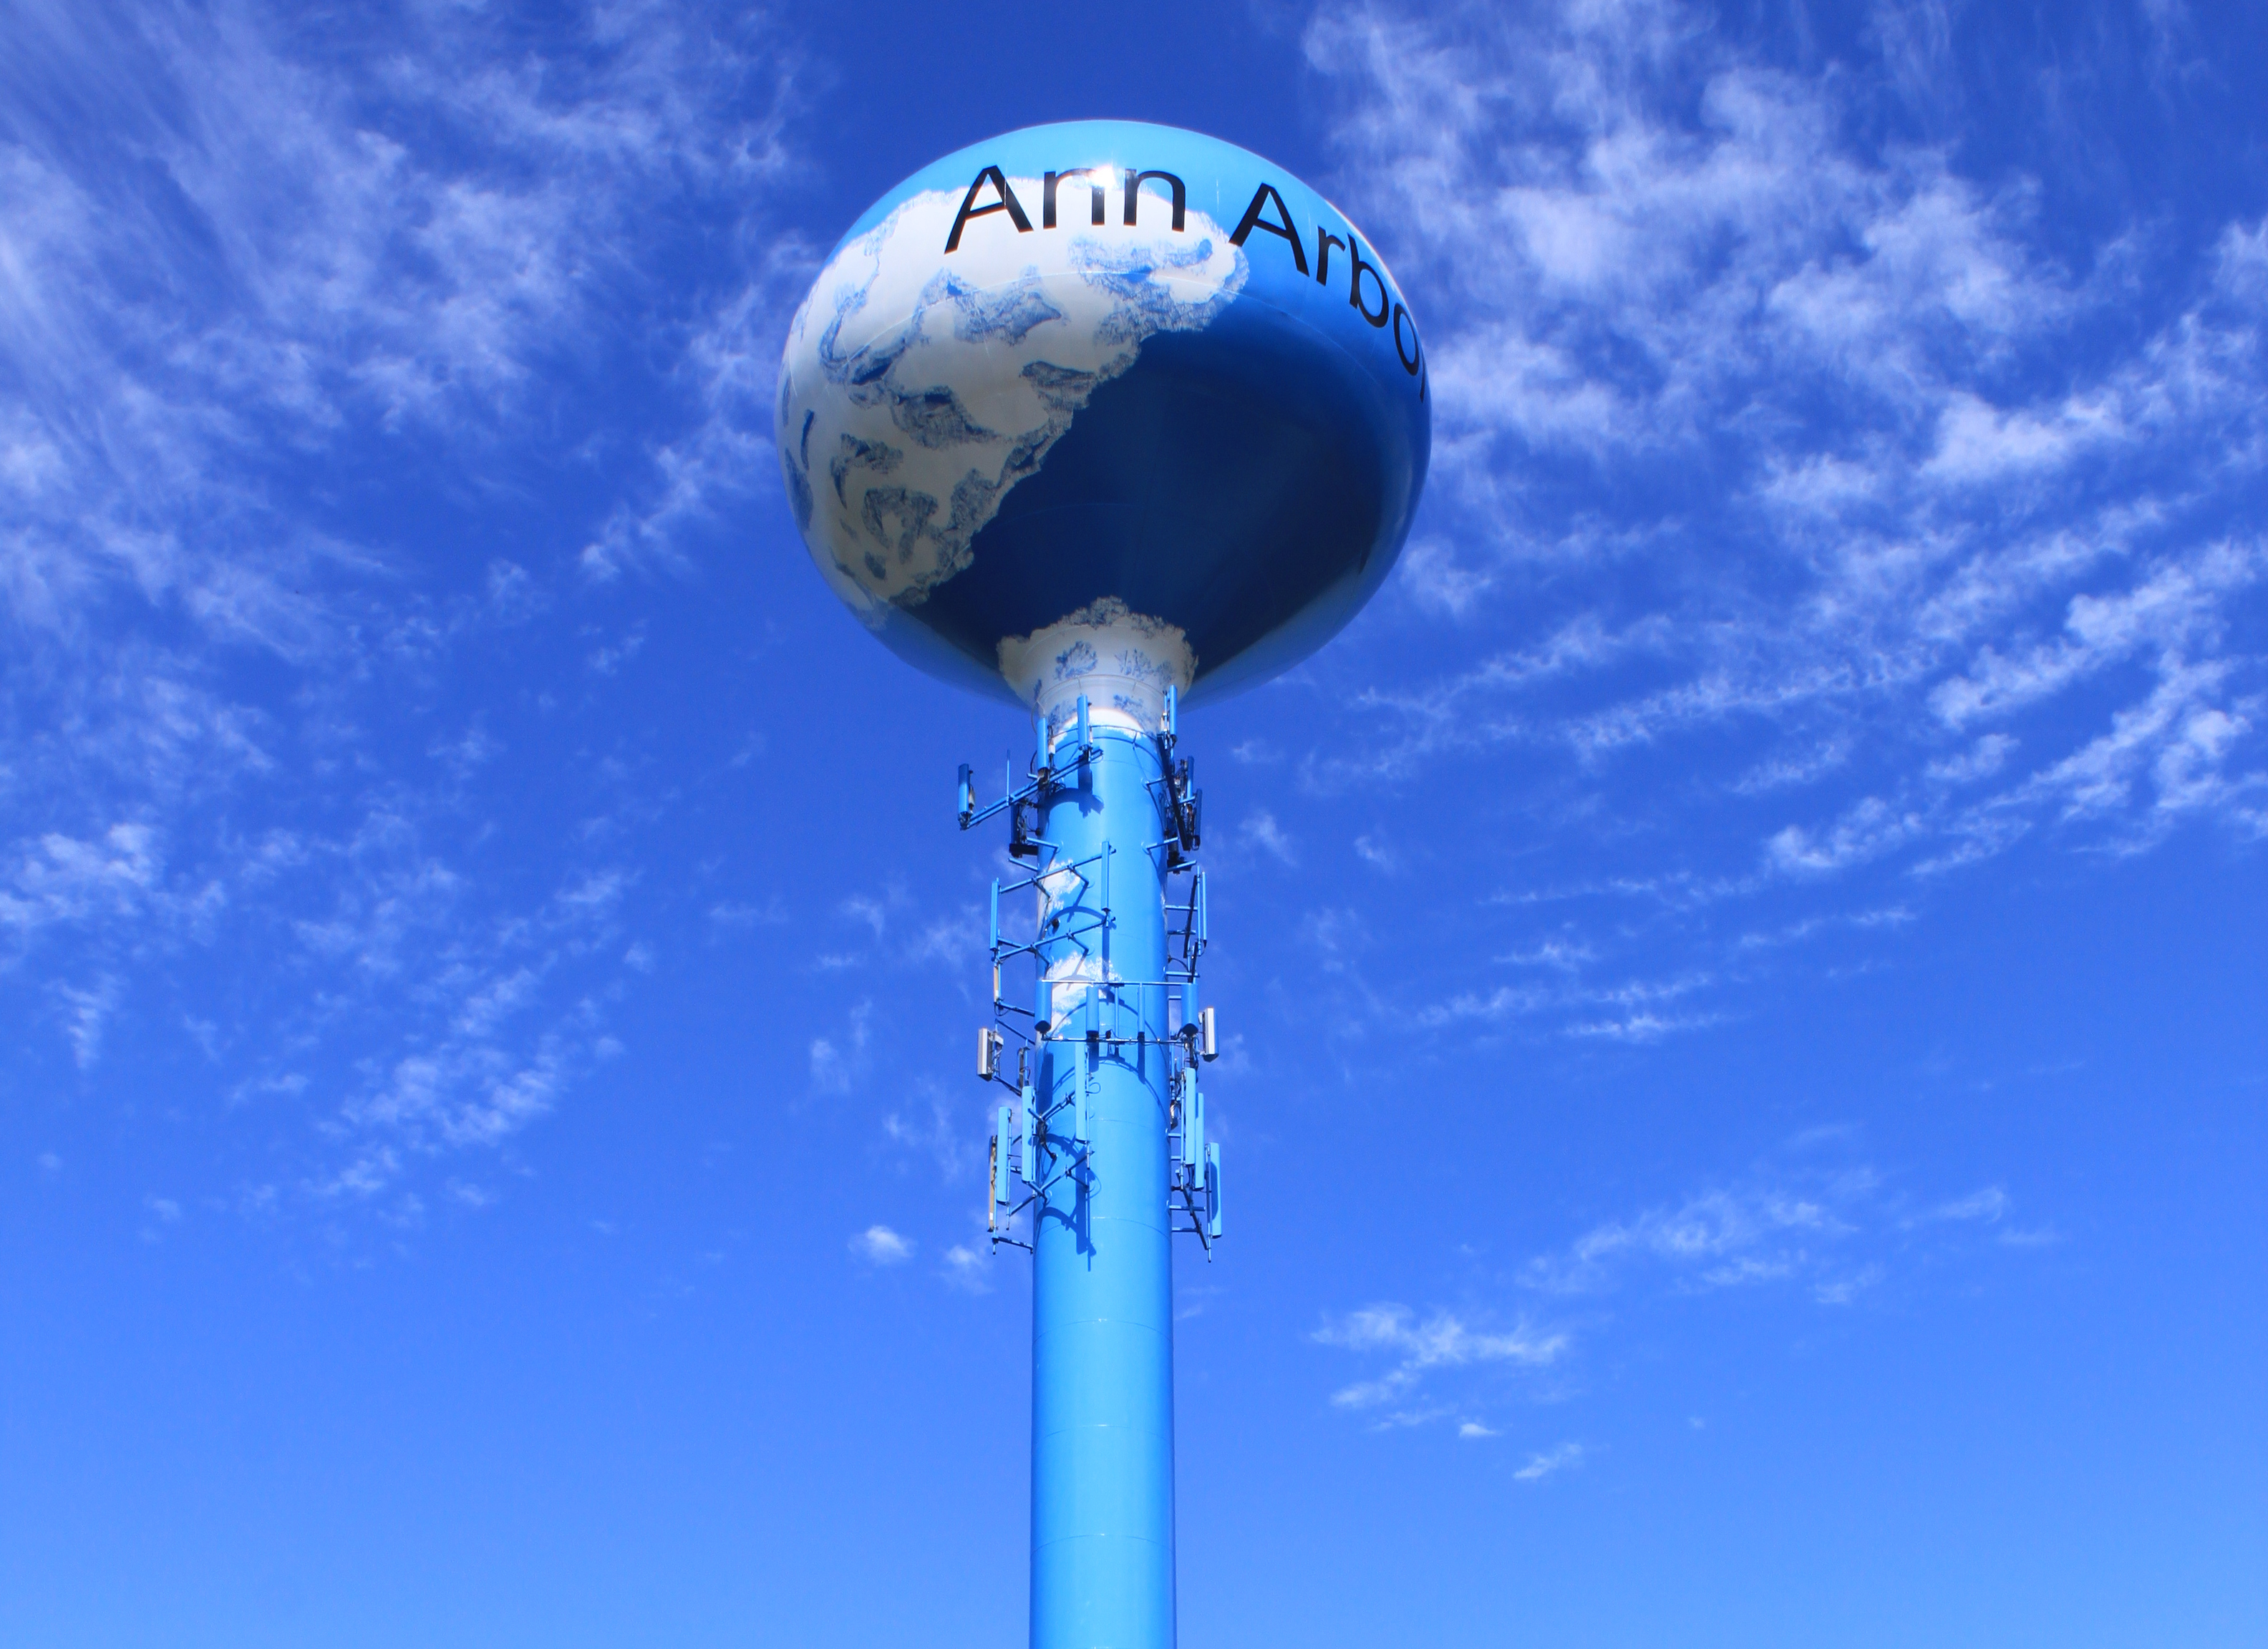 Water Tower in Ann Arbor, Michigan